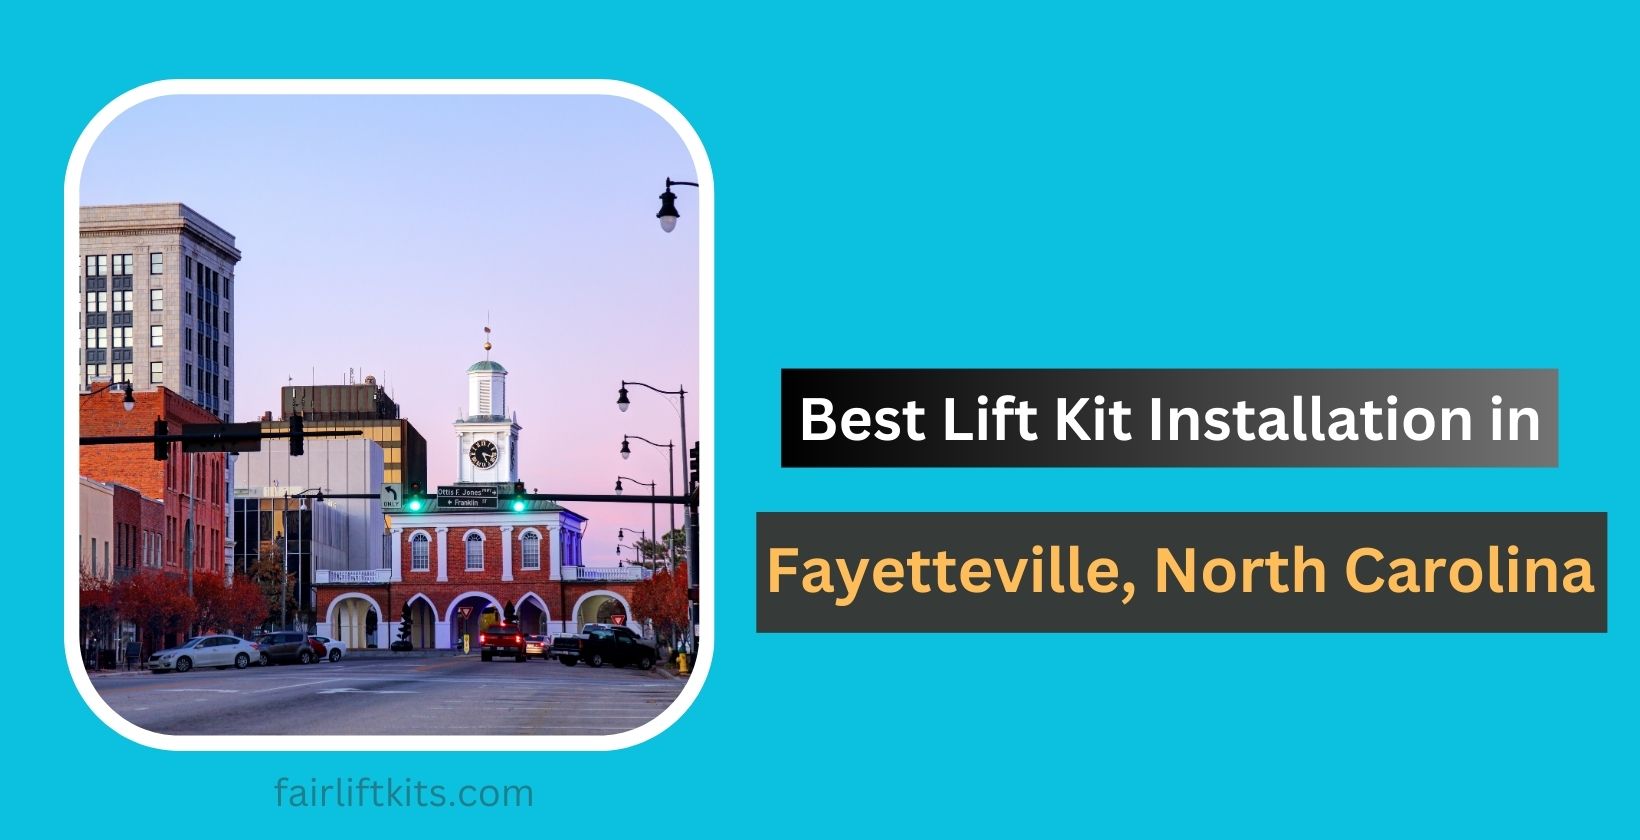 10 Best Lift Kit Installation in Fort Fayetteville